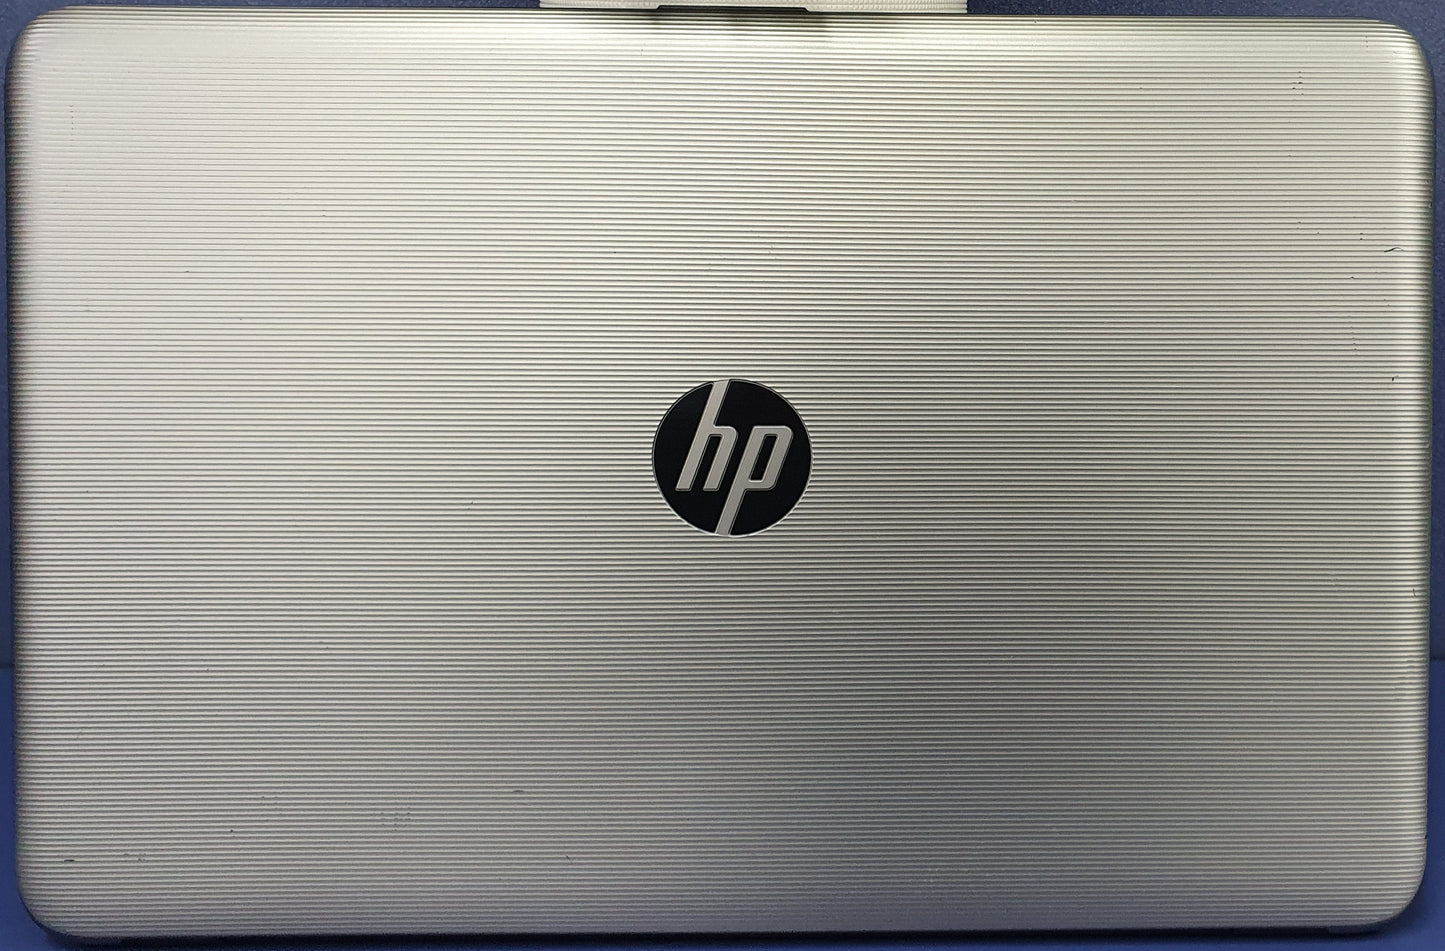 HP Laptop - i7 7th Gen - 16GB RAM - 256GB SSD - 15.6" Full HD - Windows 10 Home